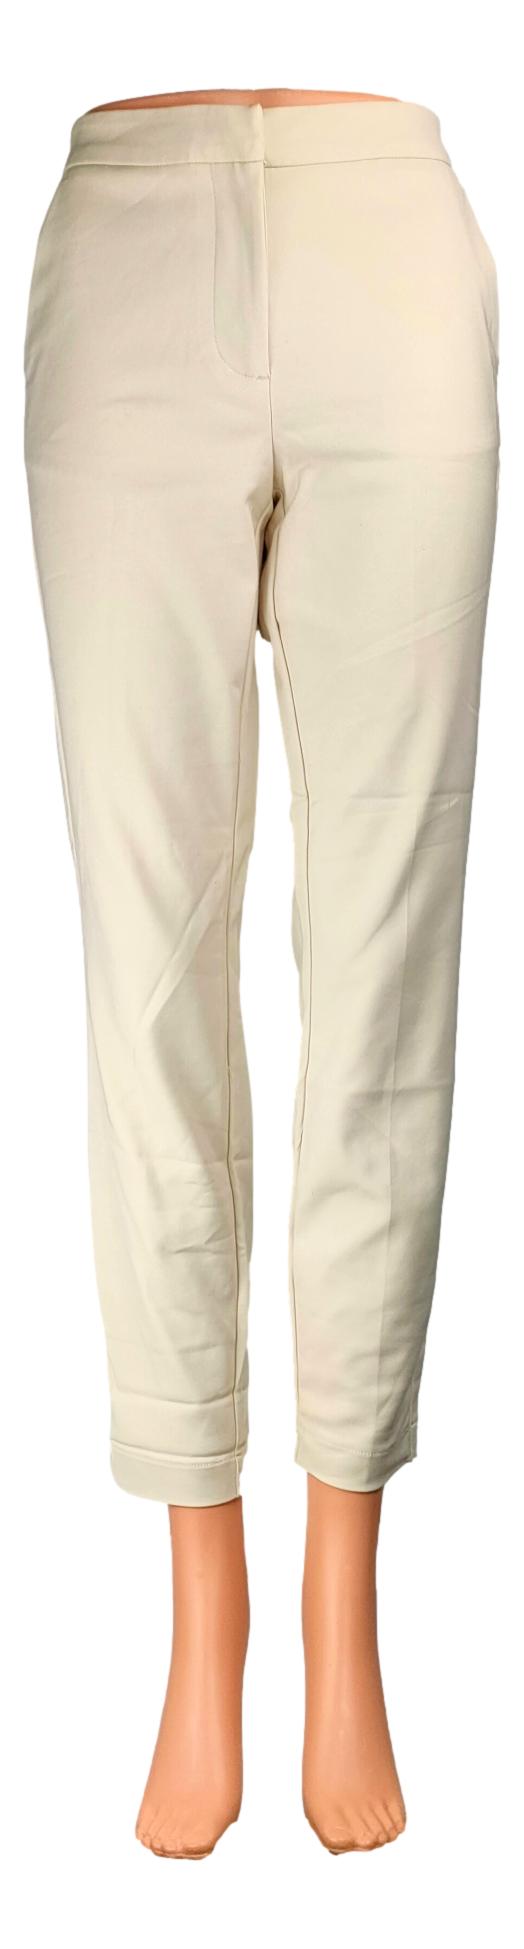 Pantalon Vero Moda - Taille 36